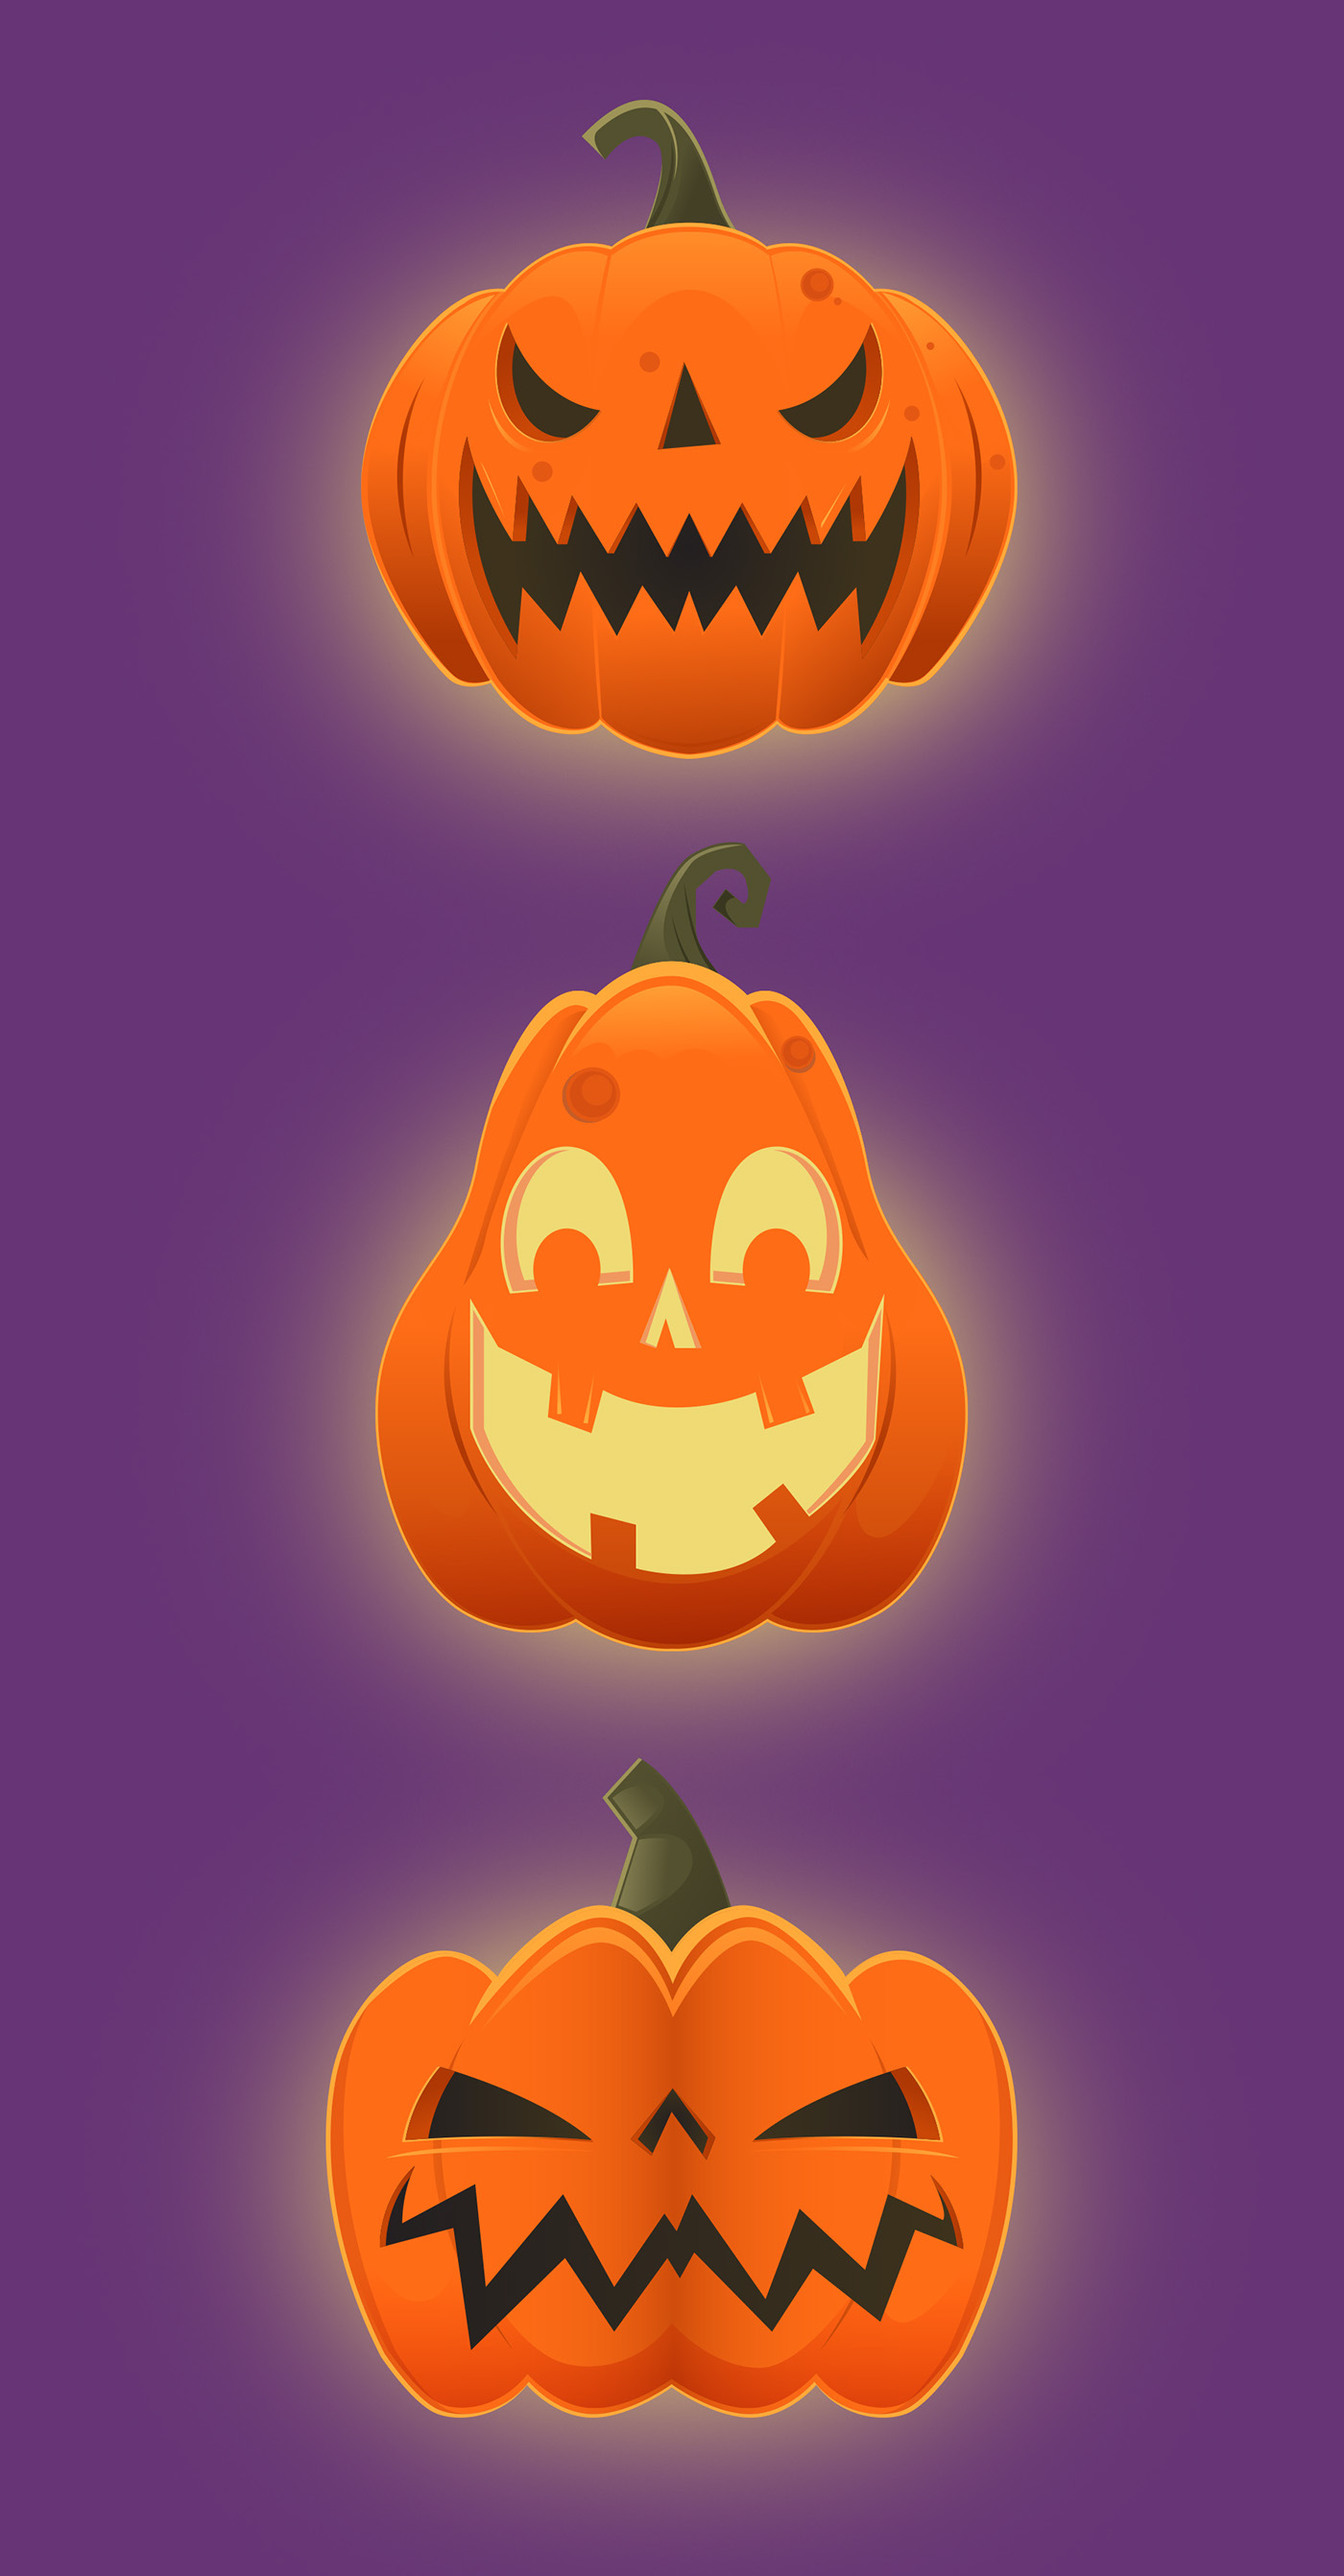 Halloween vectorart pumpkin spooky Holiday october Scary assets coffin